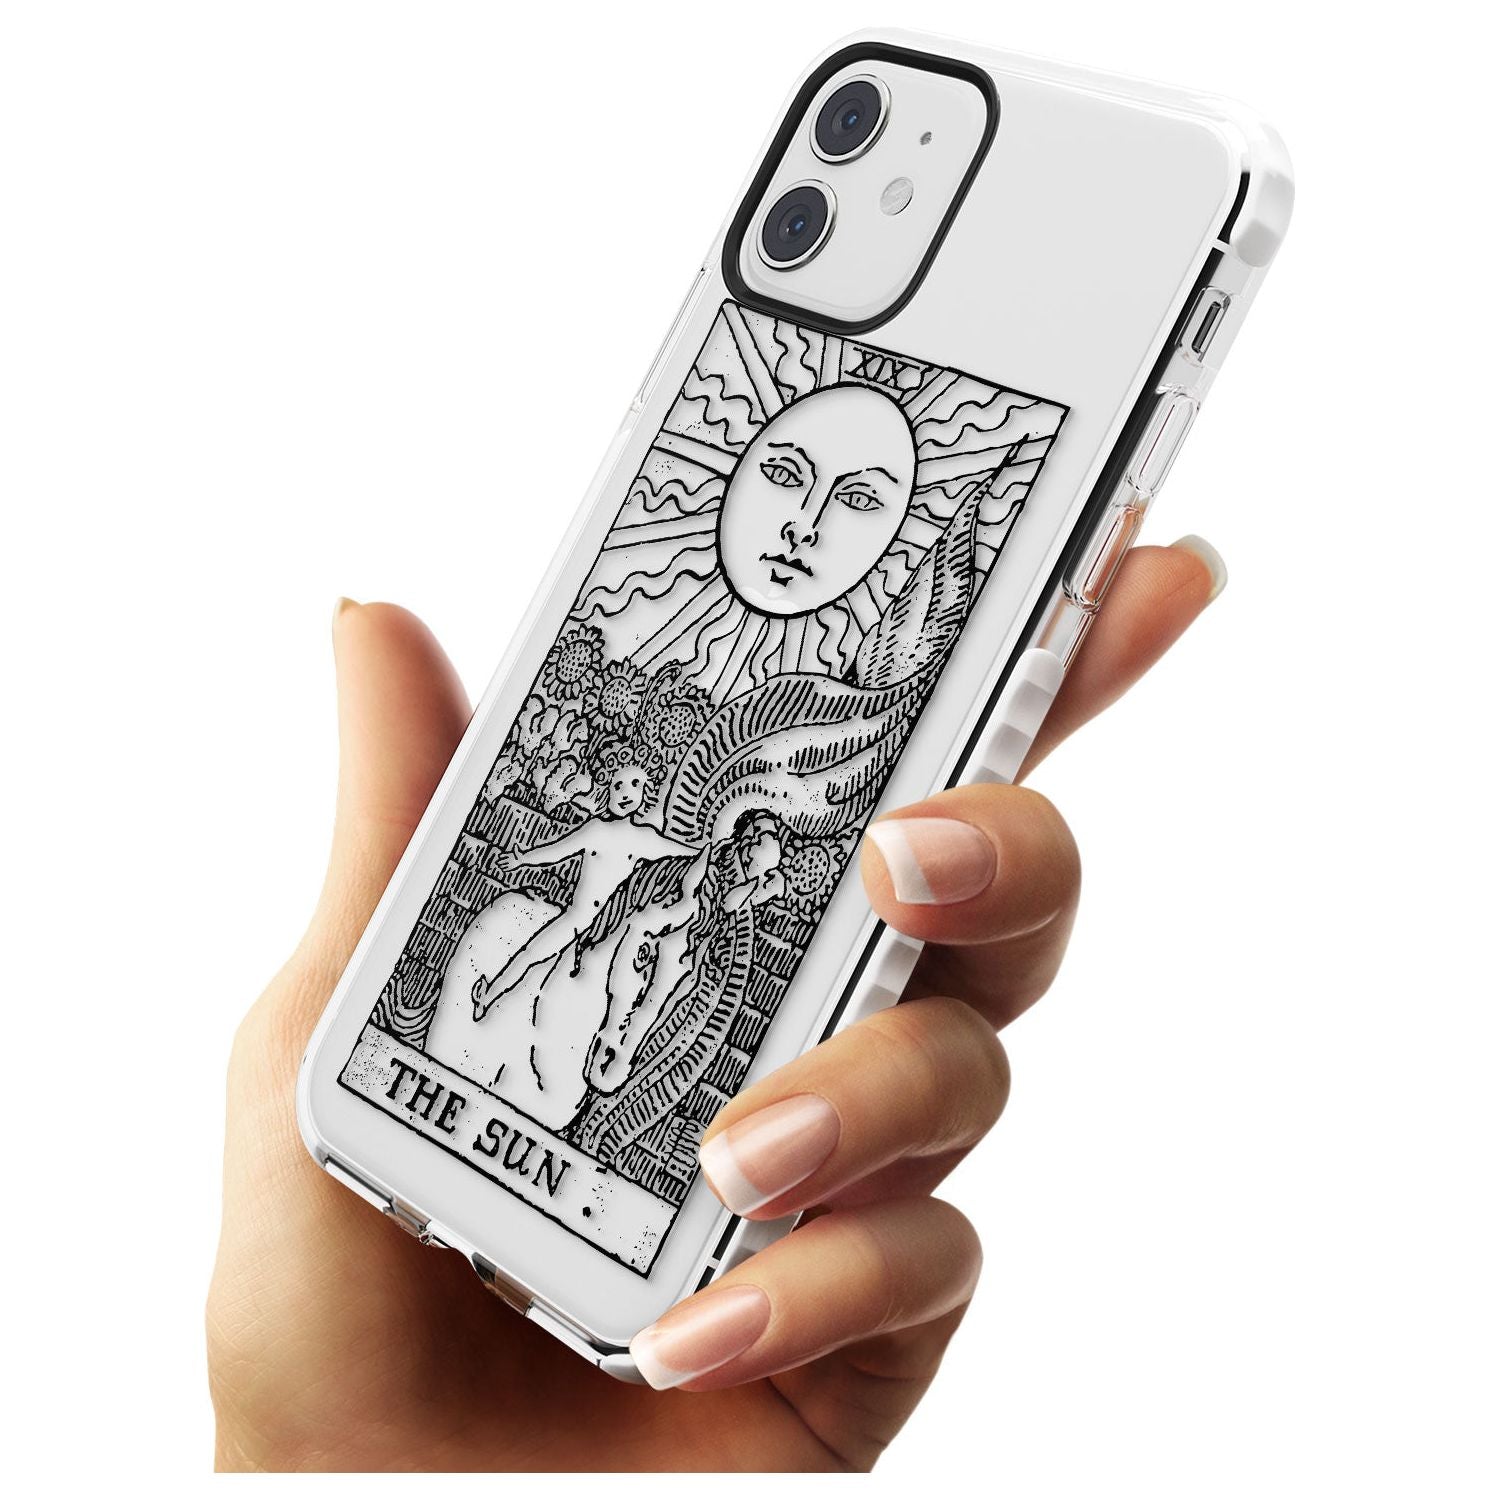 The Sun Tarot Card - Transparent Slim TPU Phone Case for iPhone 11